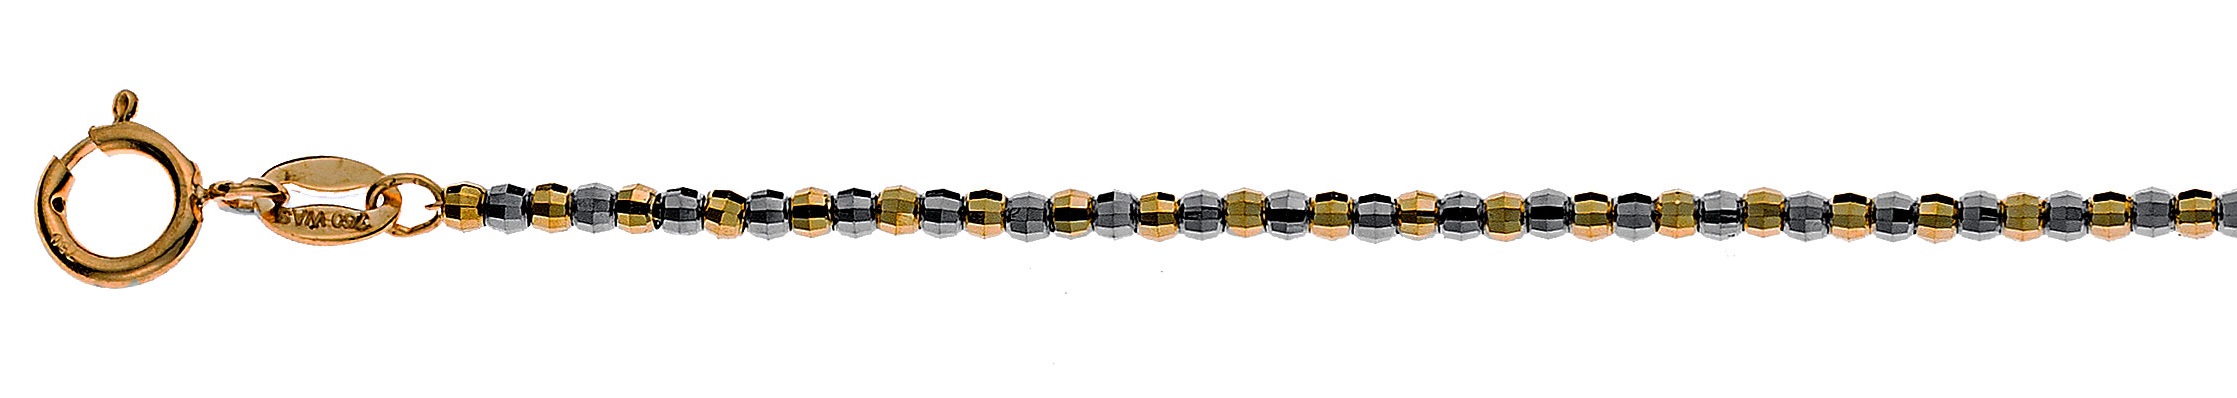 AURONOS Prestige Ball bracelet yellow gold 18K 19cm 